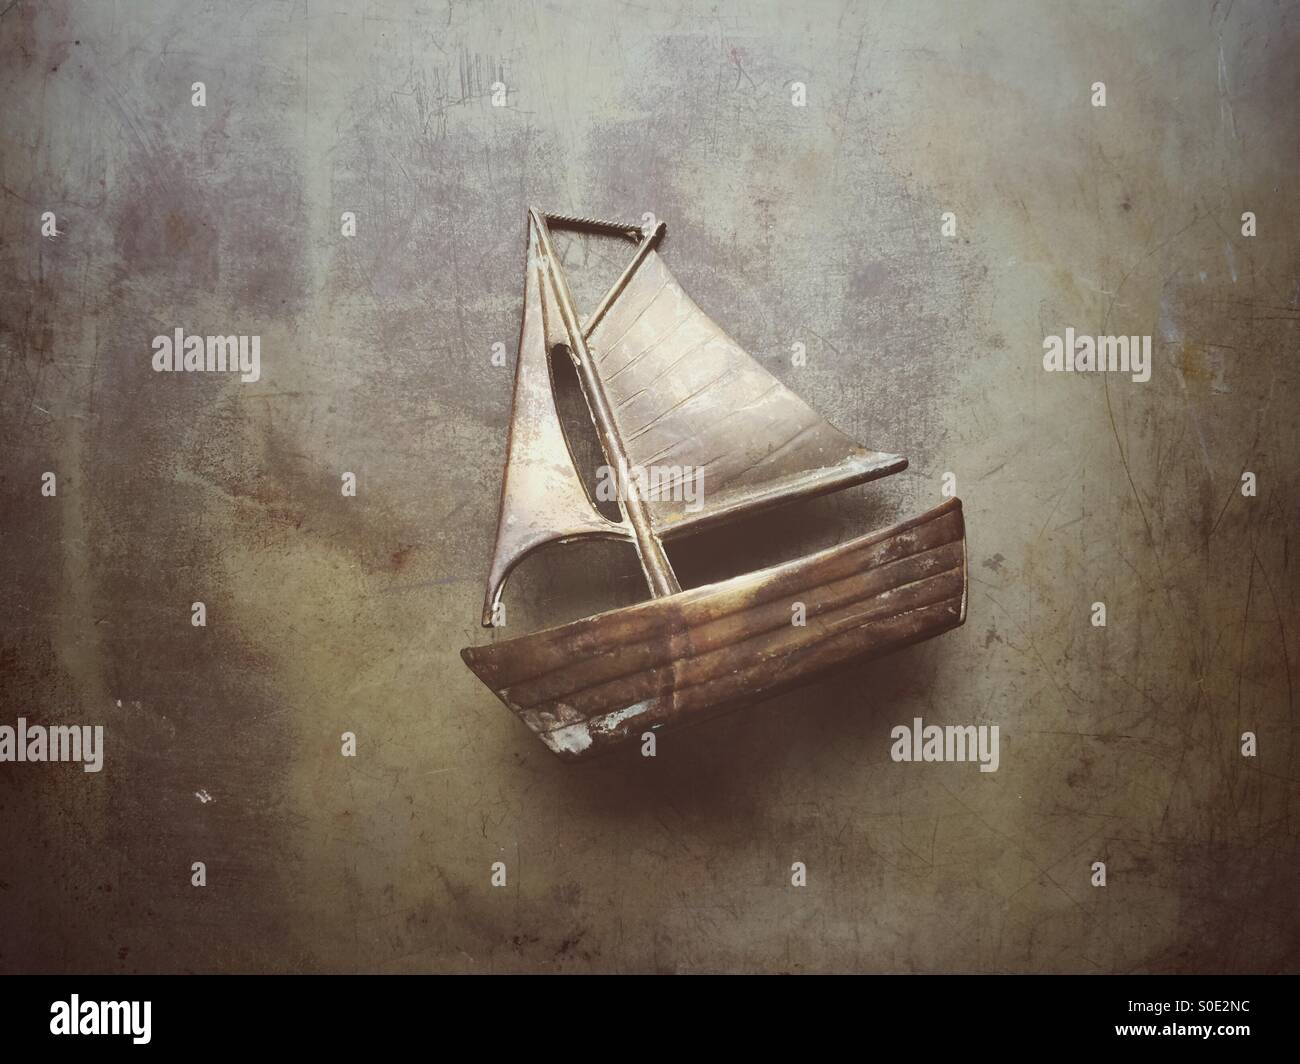 Old metal sailing boat model Stock Photo